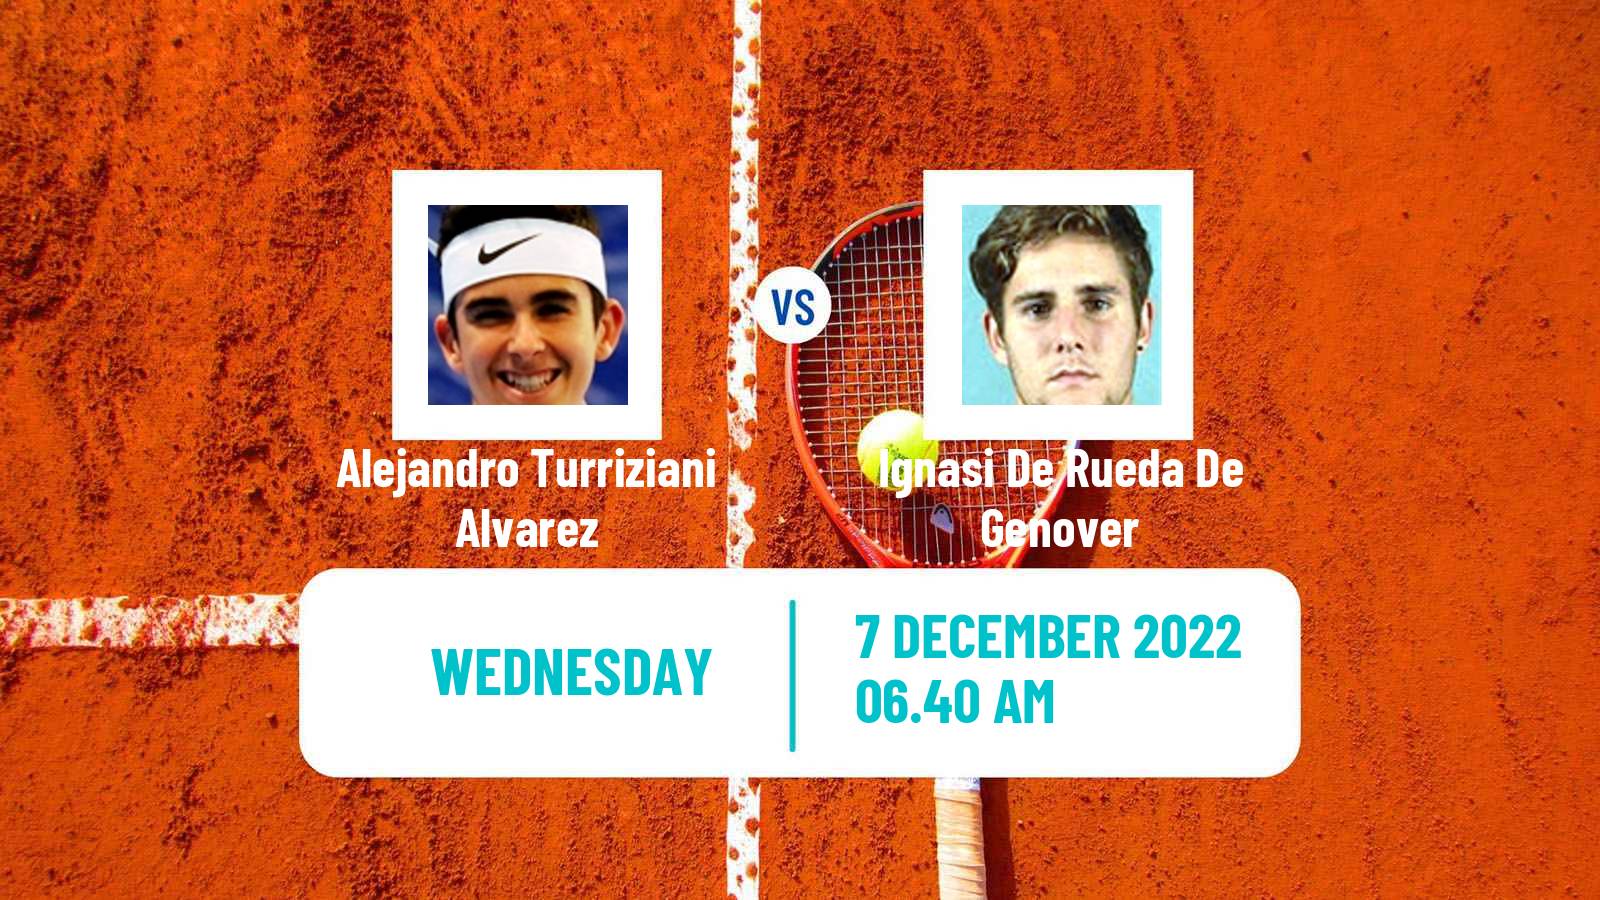 Tennis ITF Tournaments Alejandro Turriziani Alvarez - Ignasi De Rueda De Genover